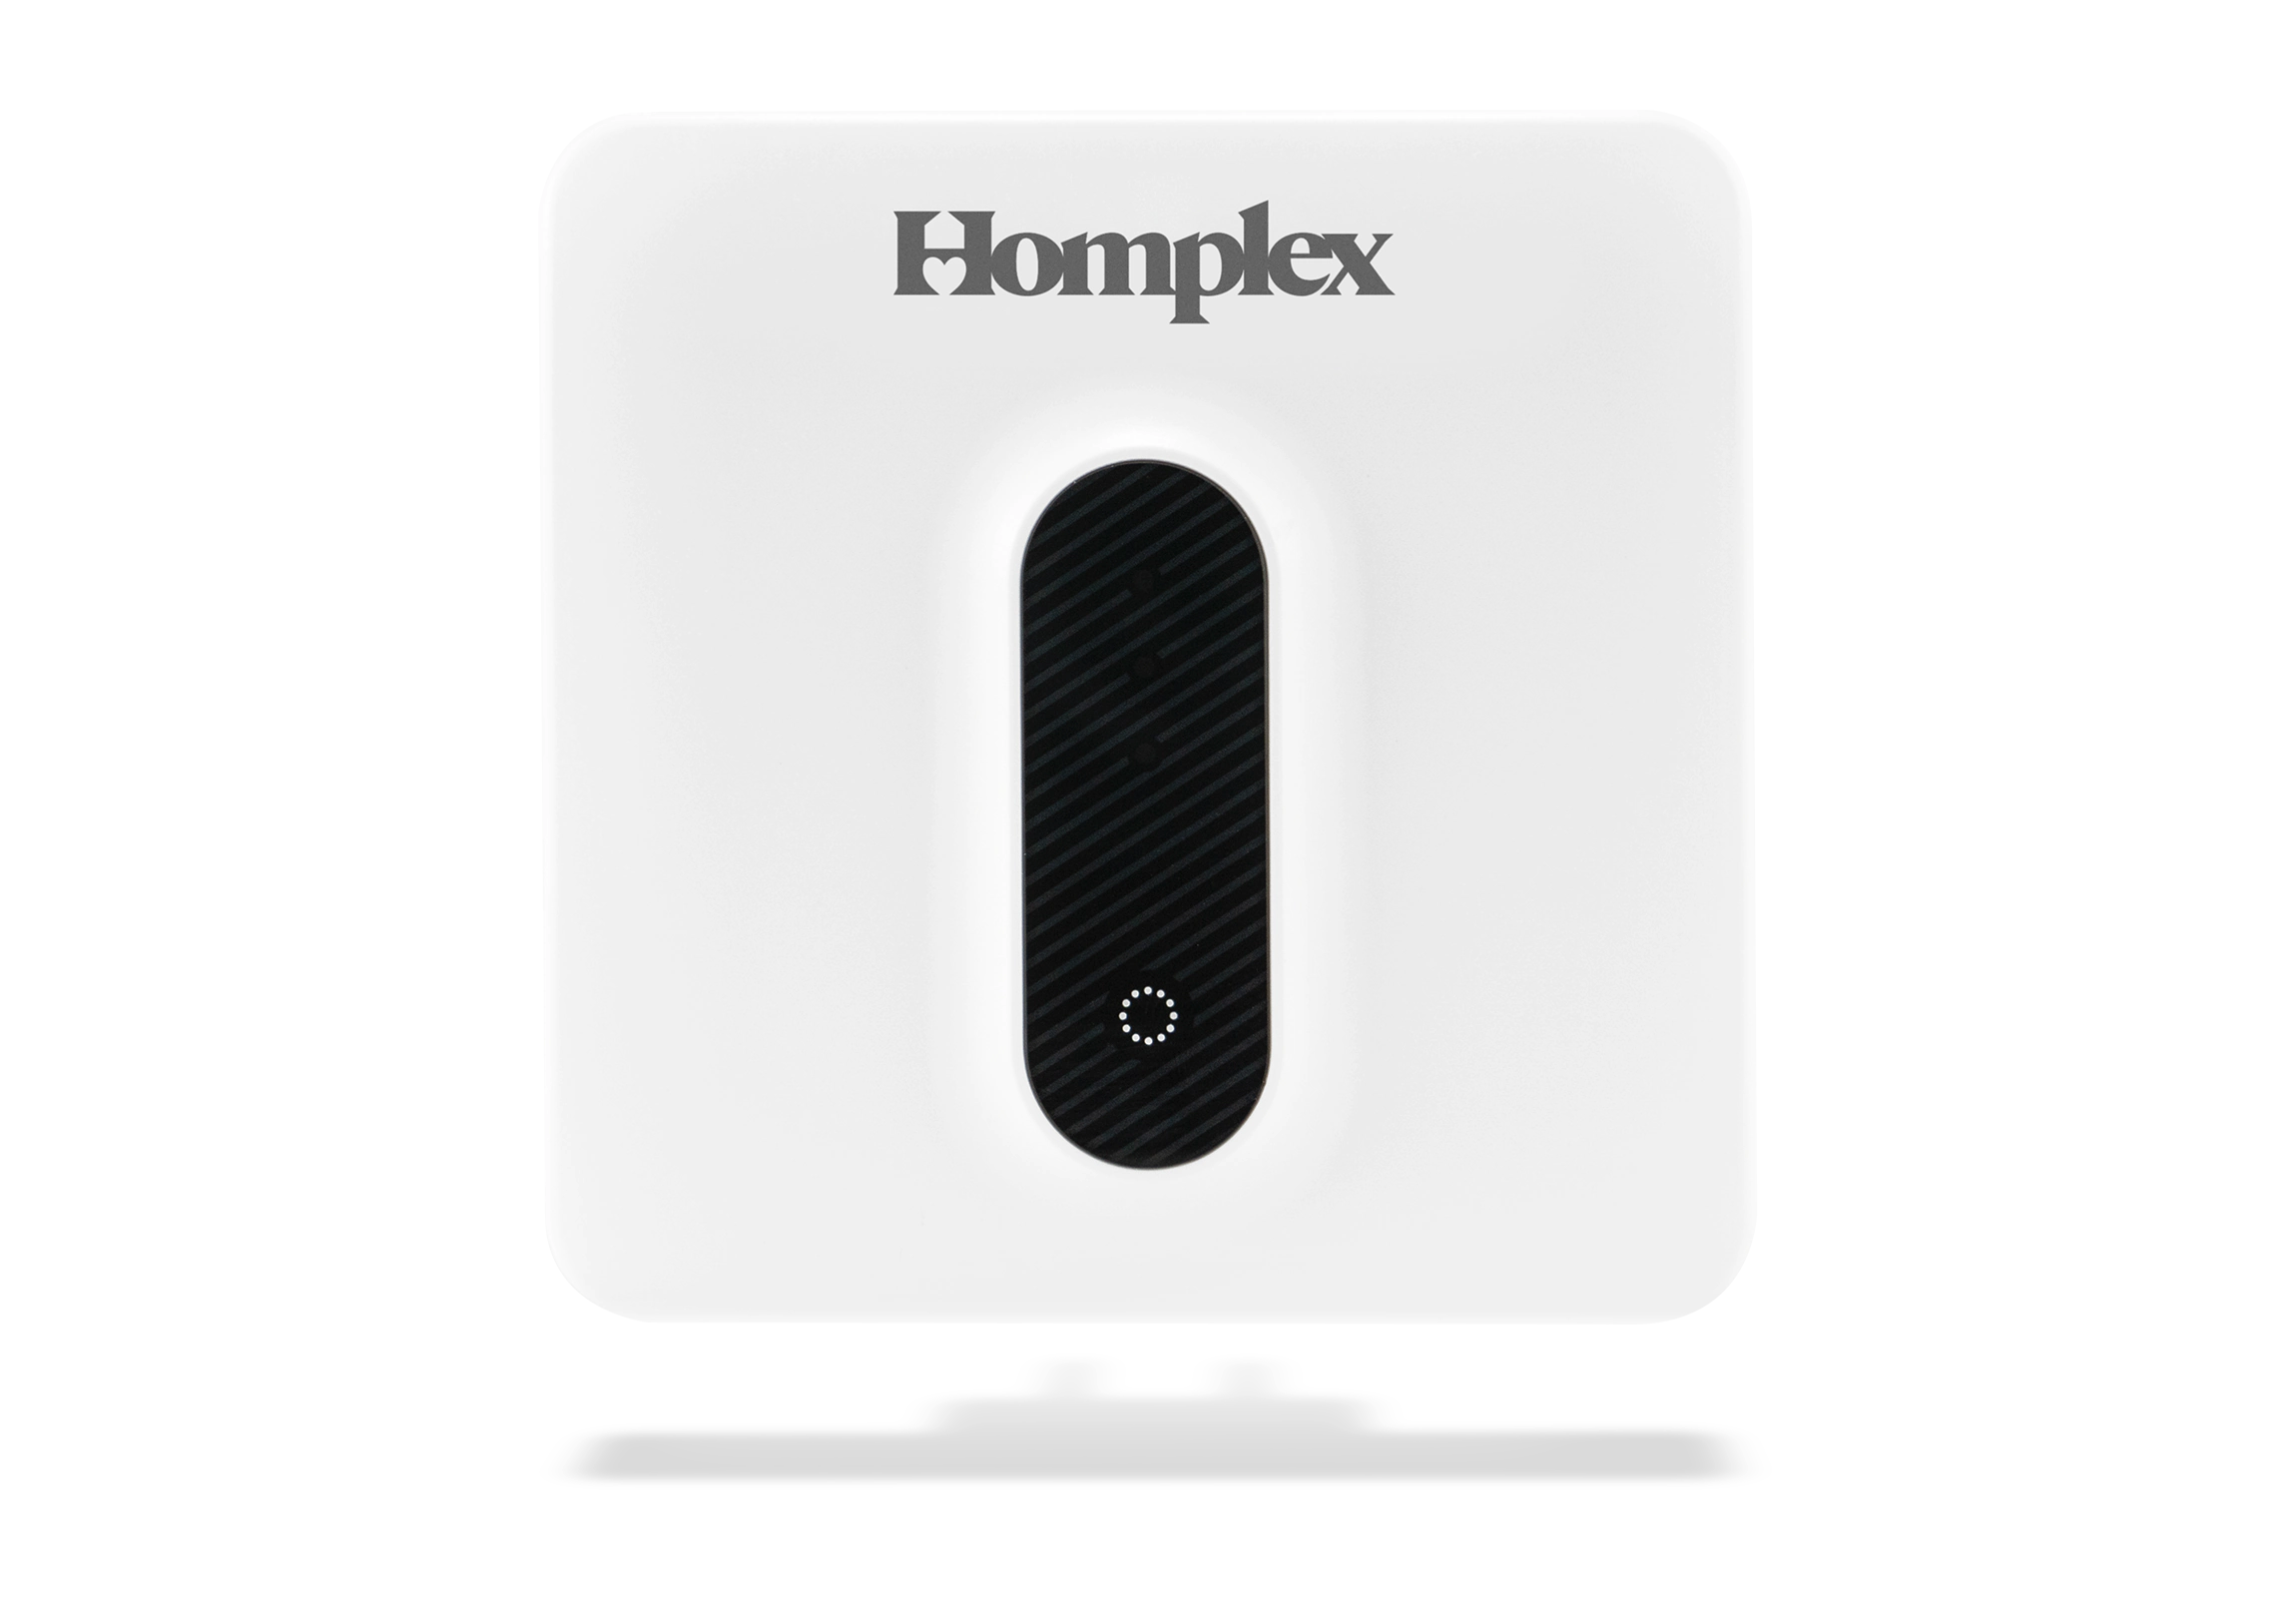 Homplex HT2310 WR intelligent room thermostat receiver gateway, front view